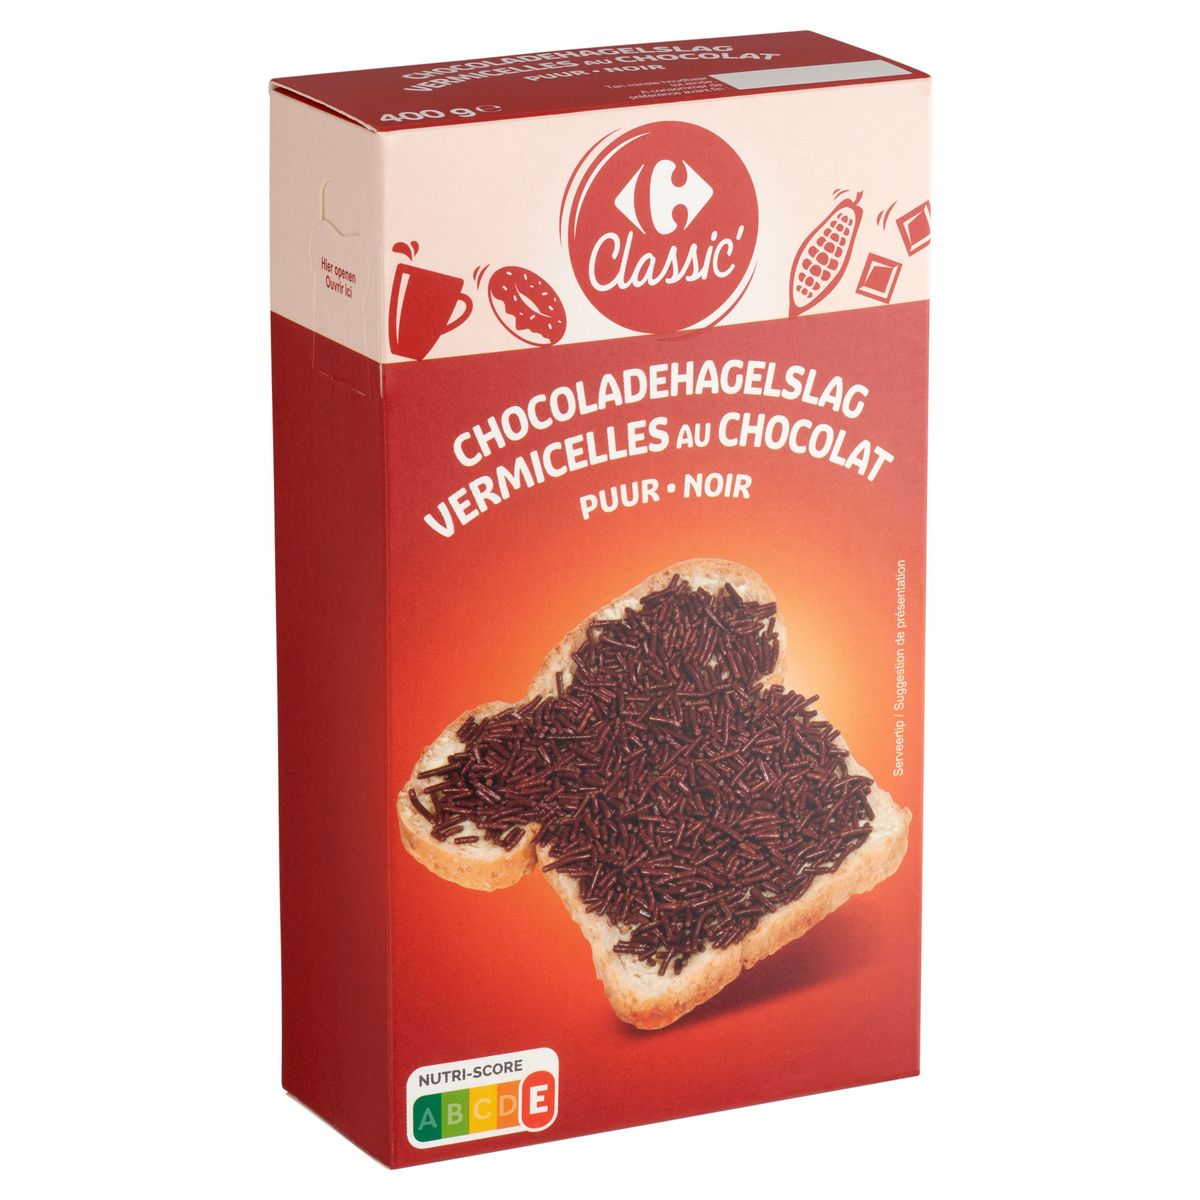 Carrefour Classic' Chocoladehagelslag Pure 400 g